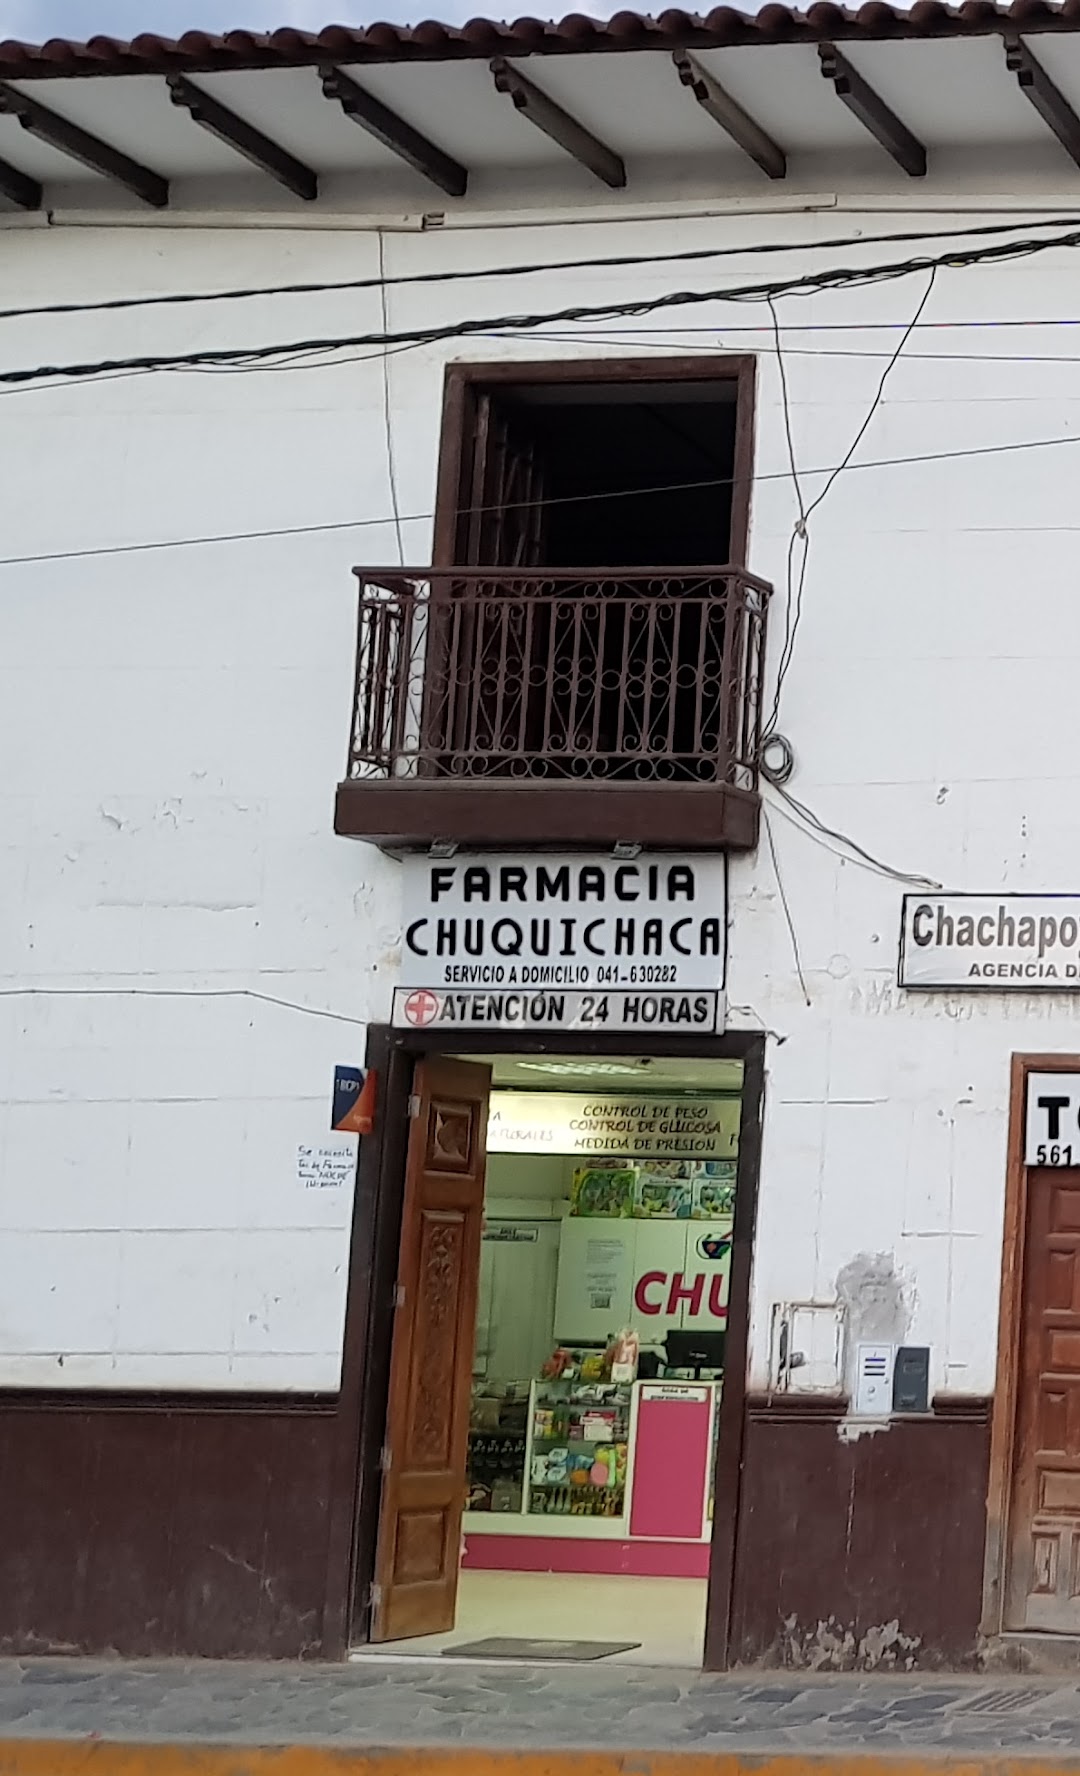 Farmacia Chuquichaca